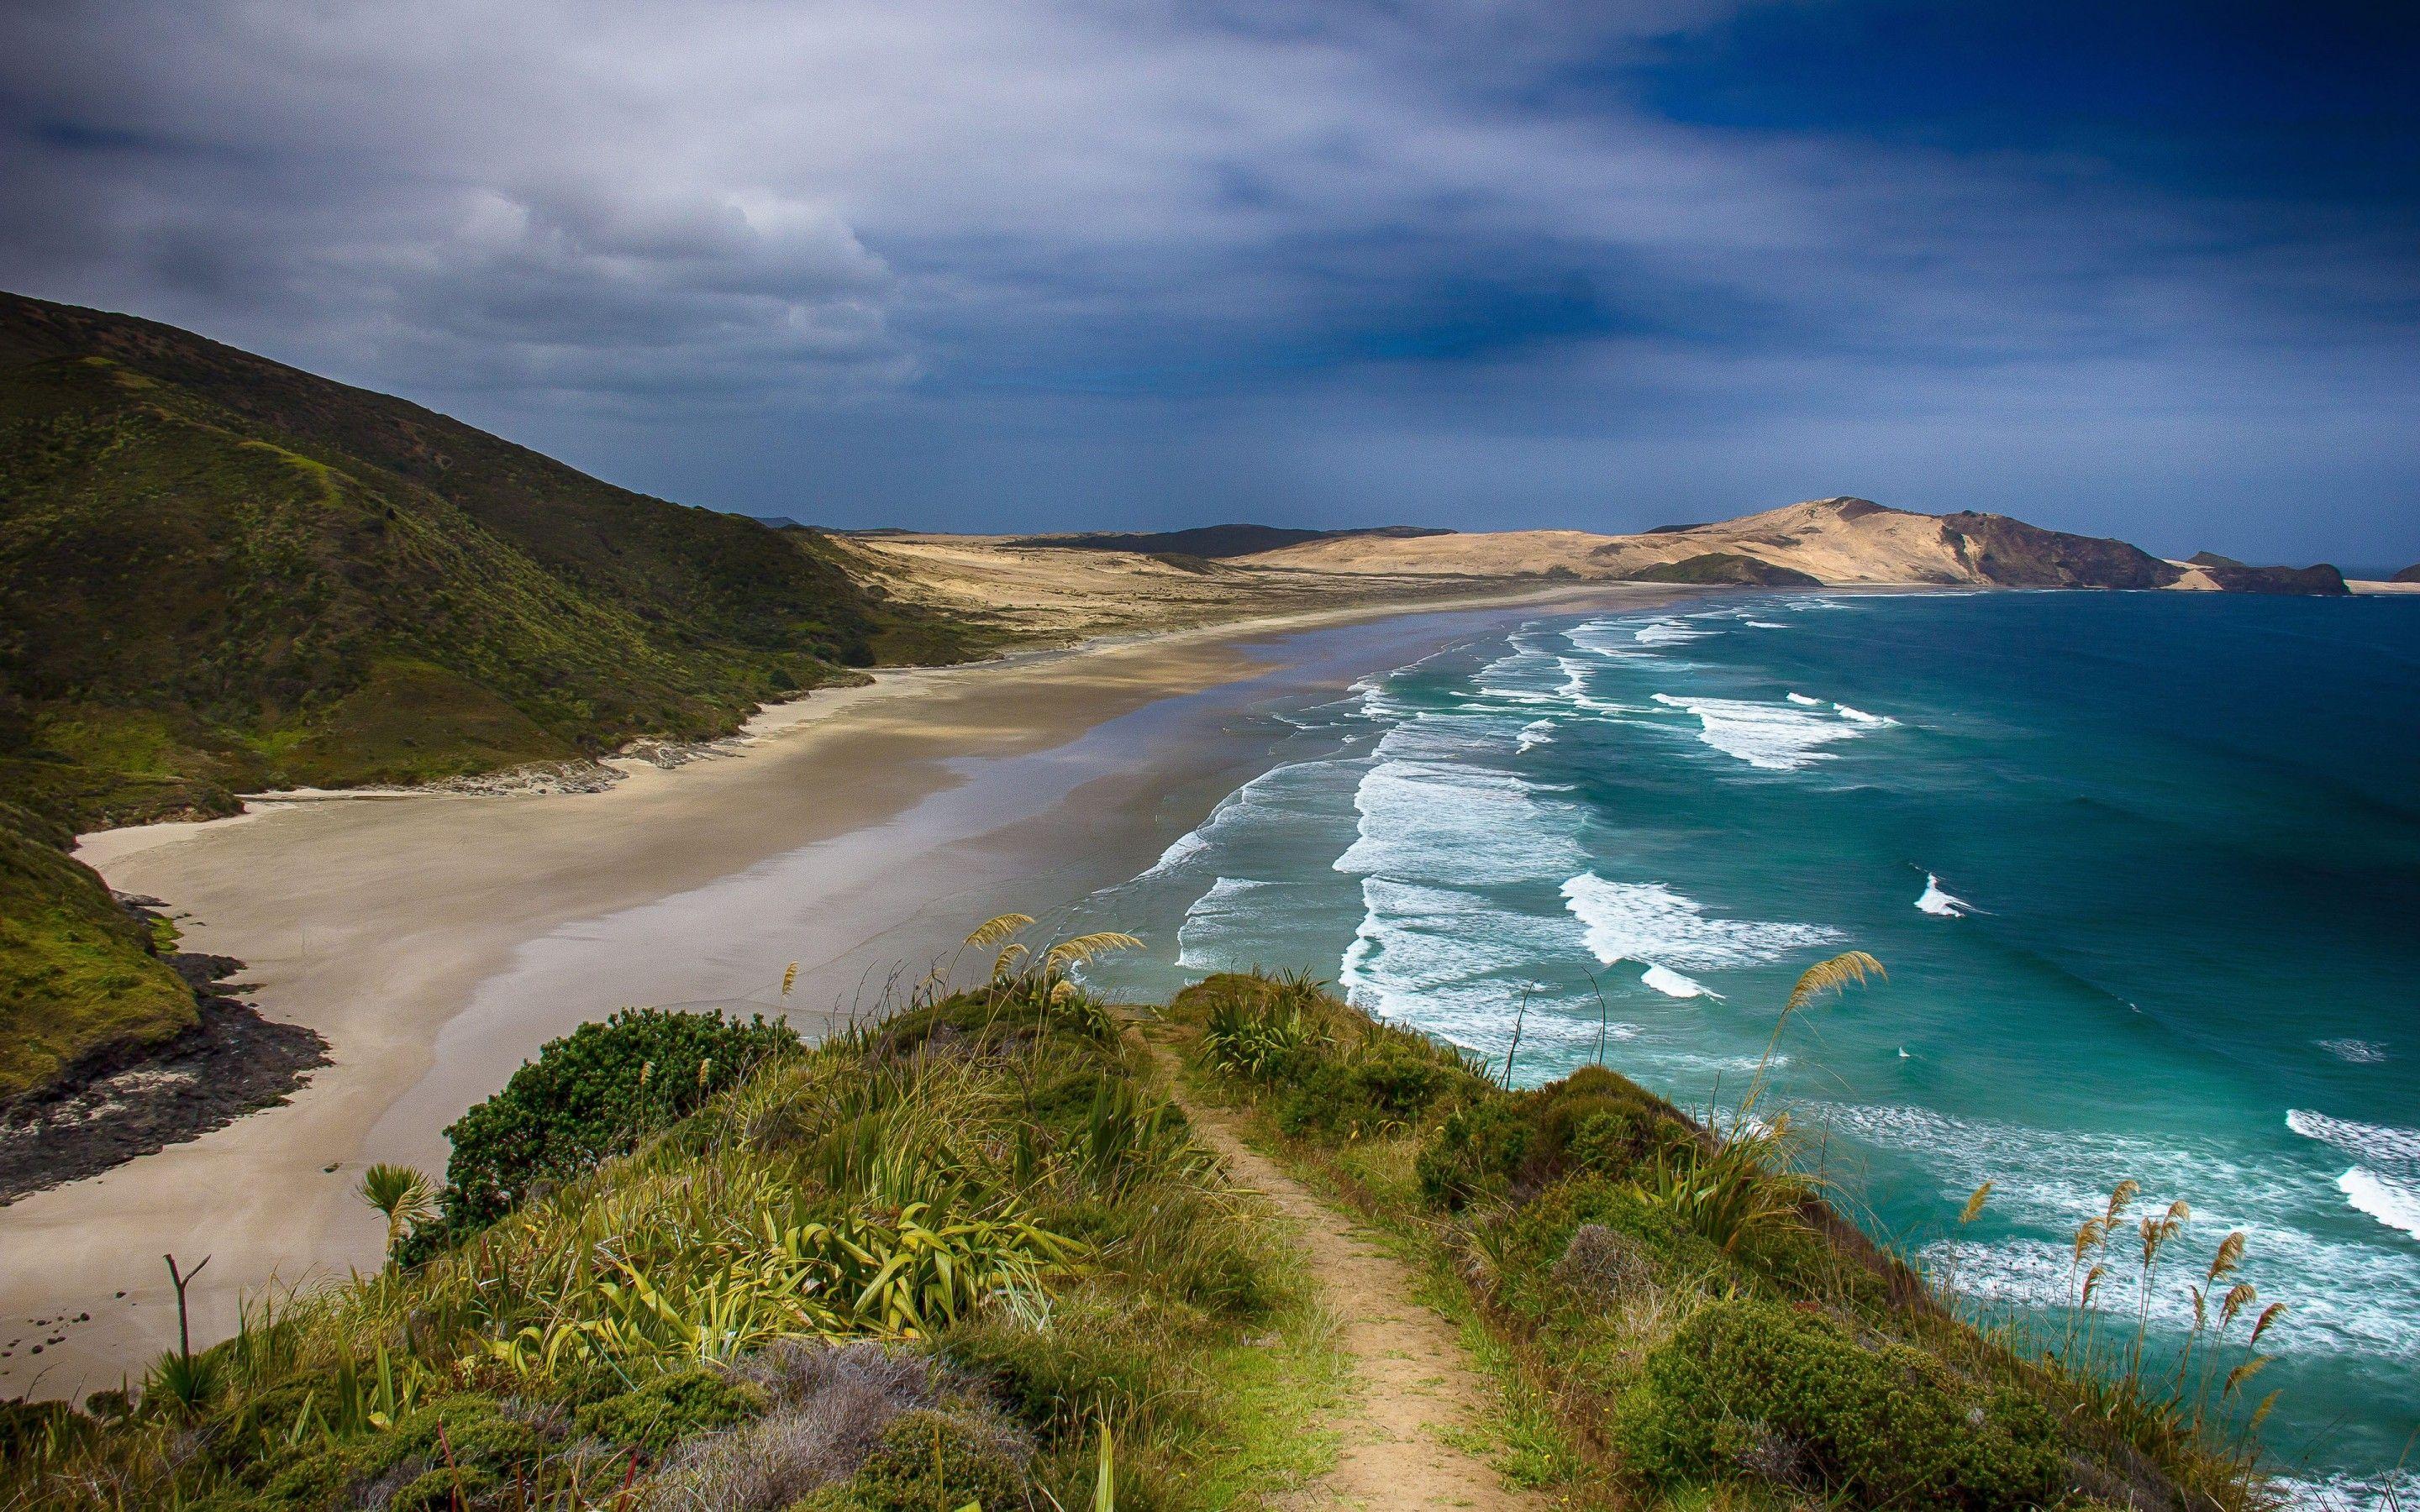 New Zealand Beach Wallpapers Top Free New Zealand Beach Backgrounds